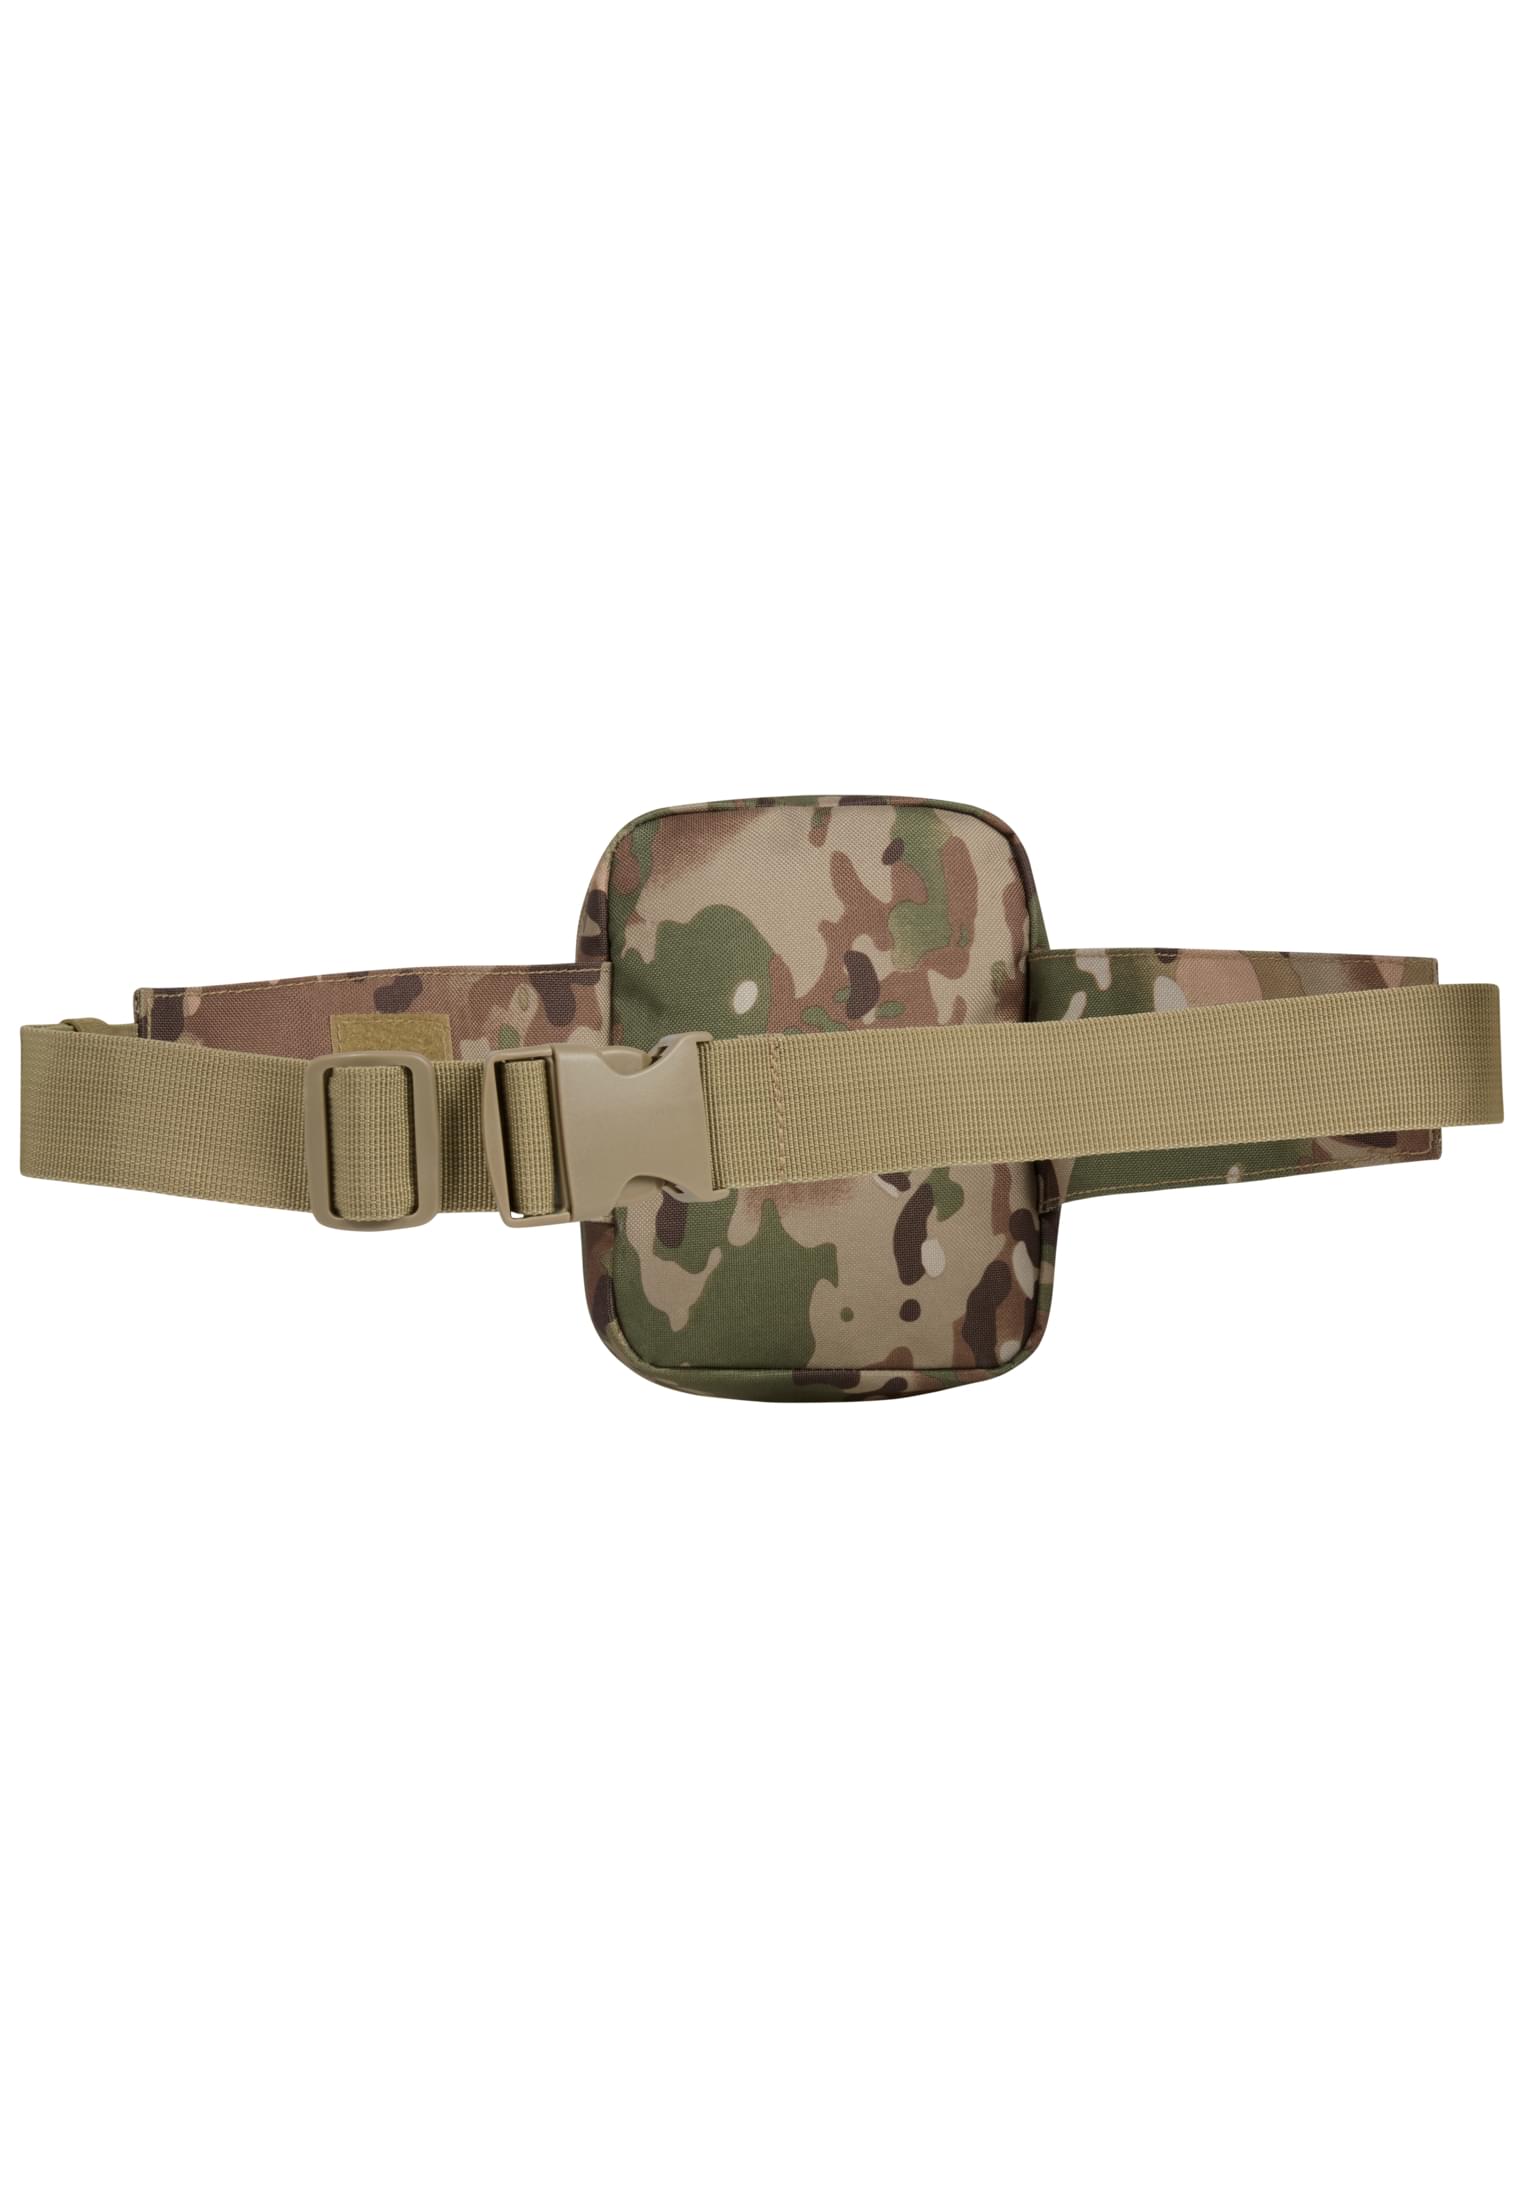 Taschen waistbeltbag Allround in Farbe tactical camo